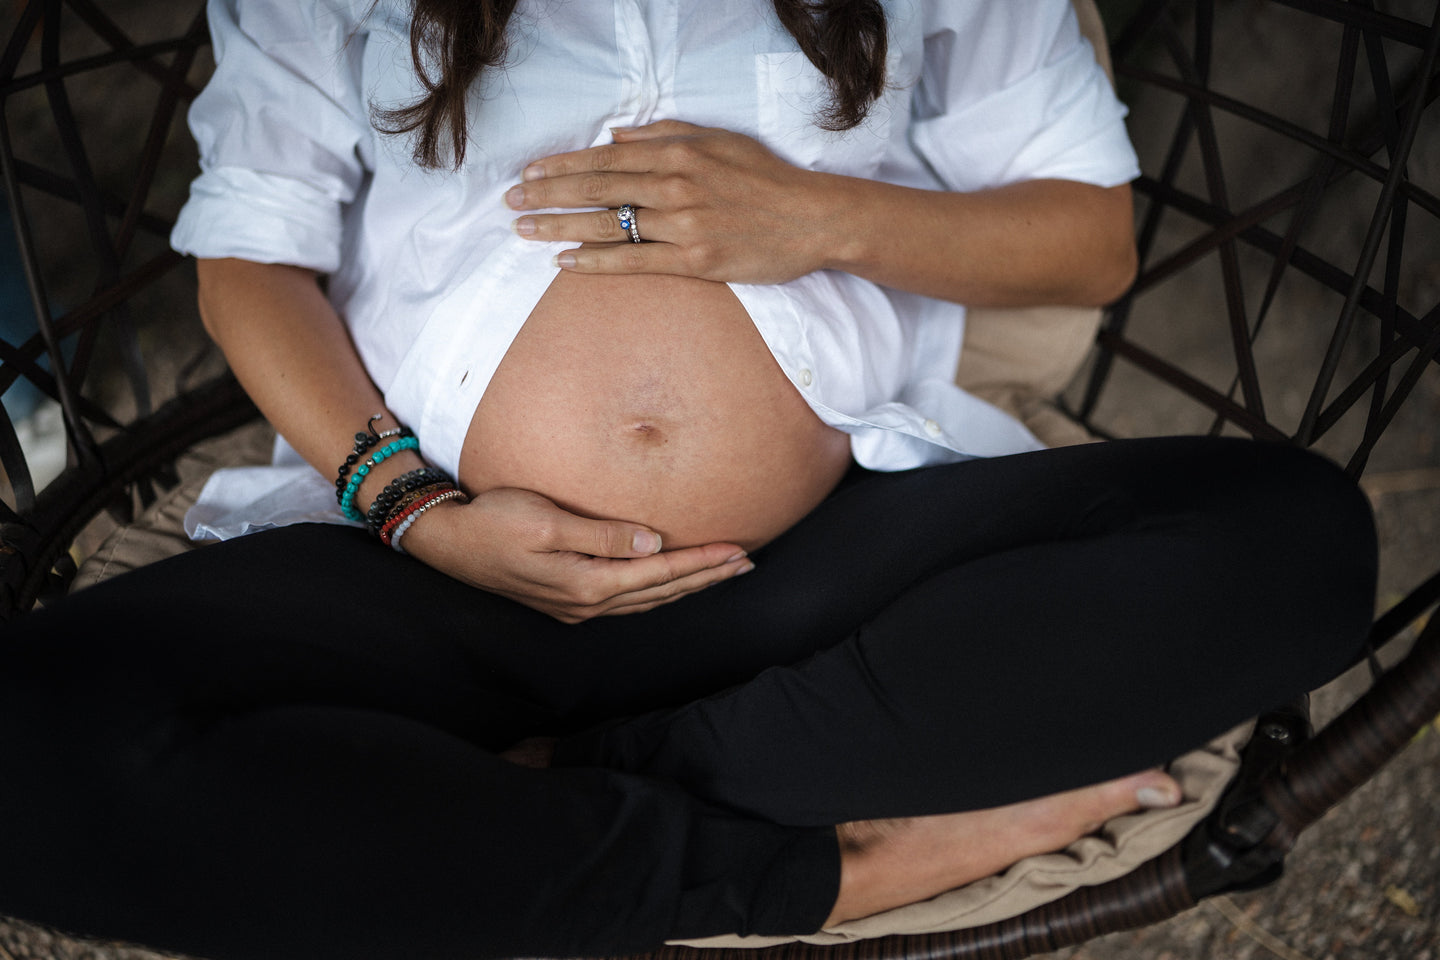 Oral Health and Fertility/Pregnancy Outcomes